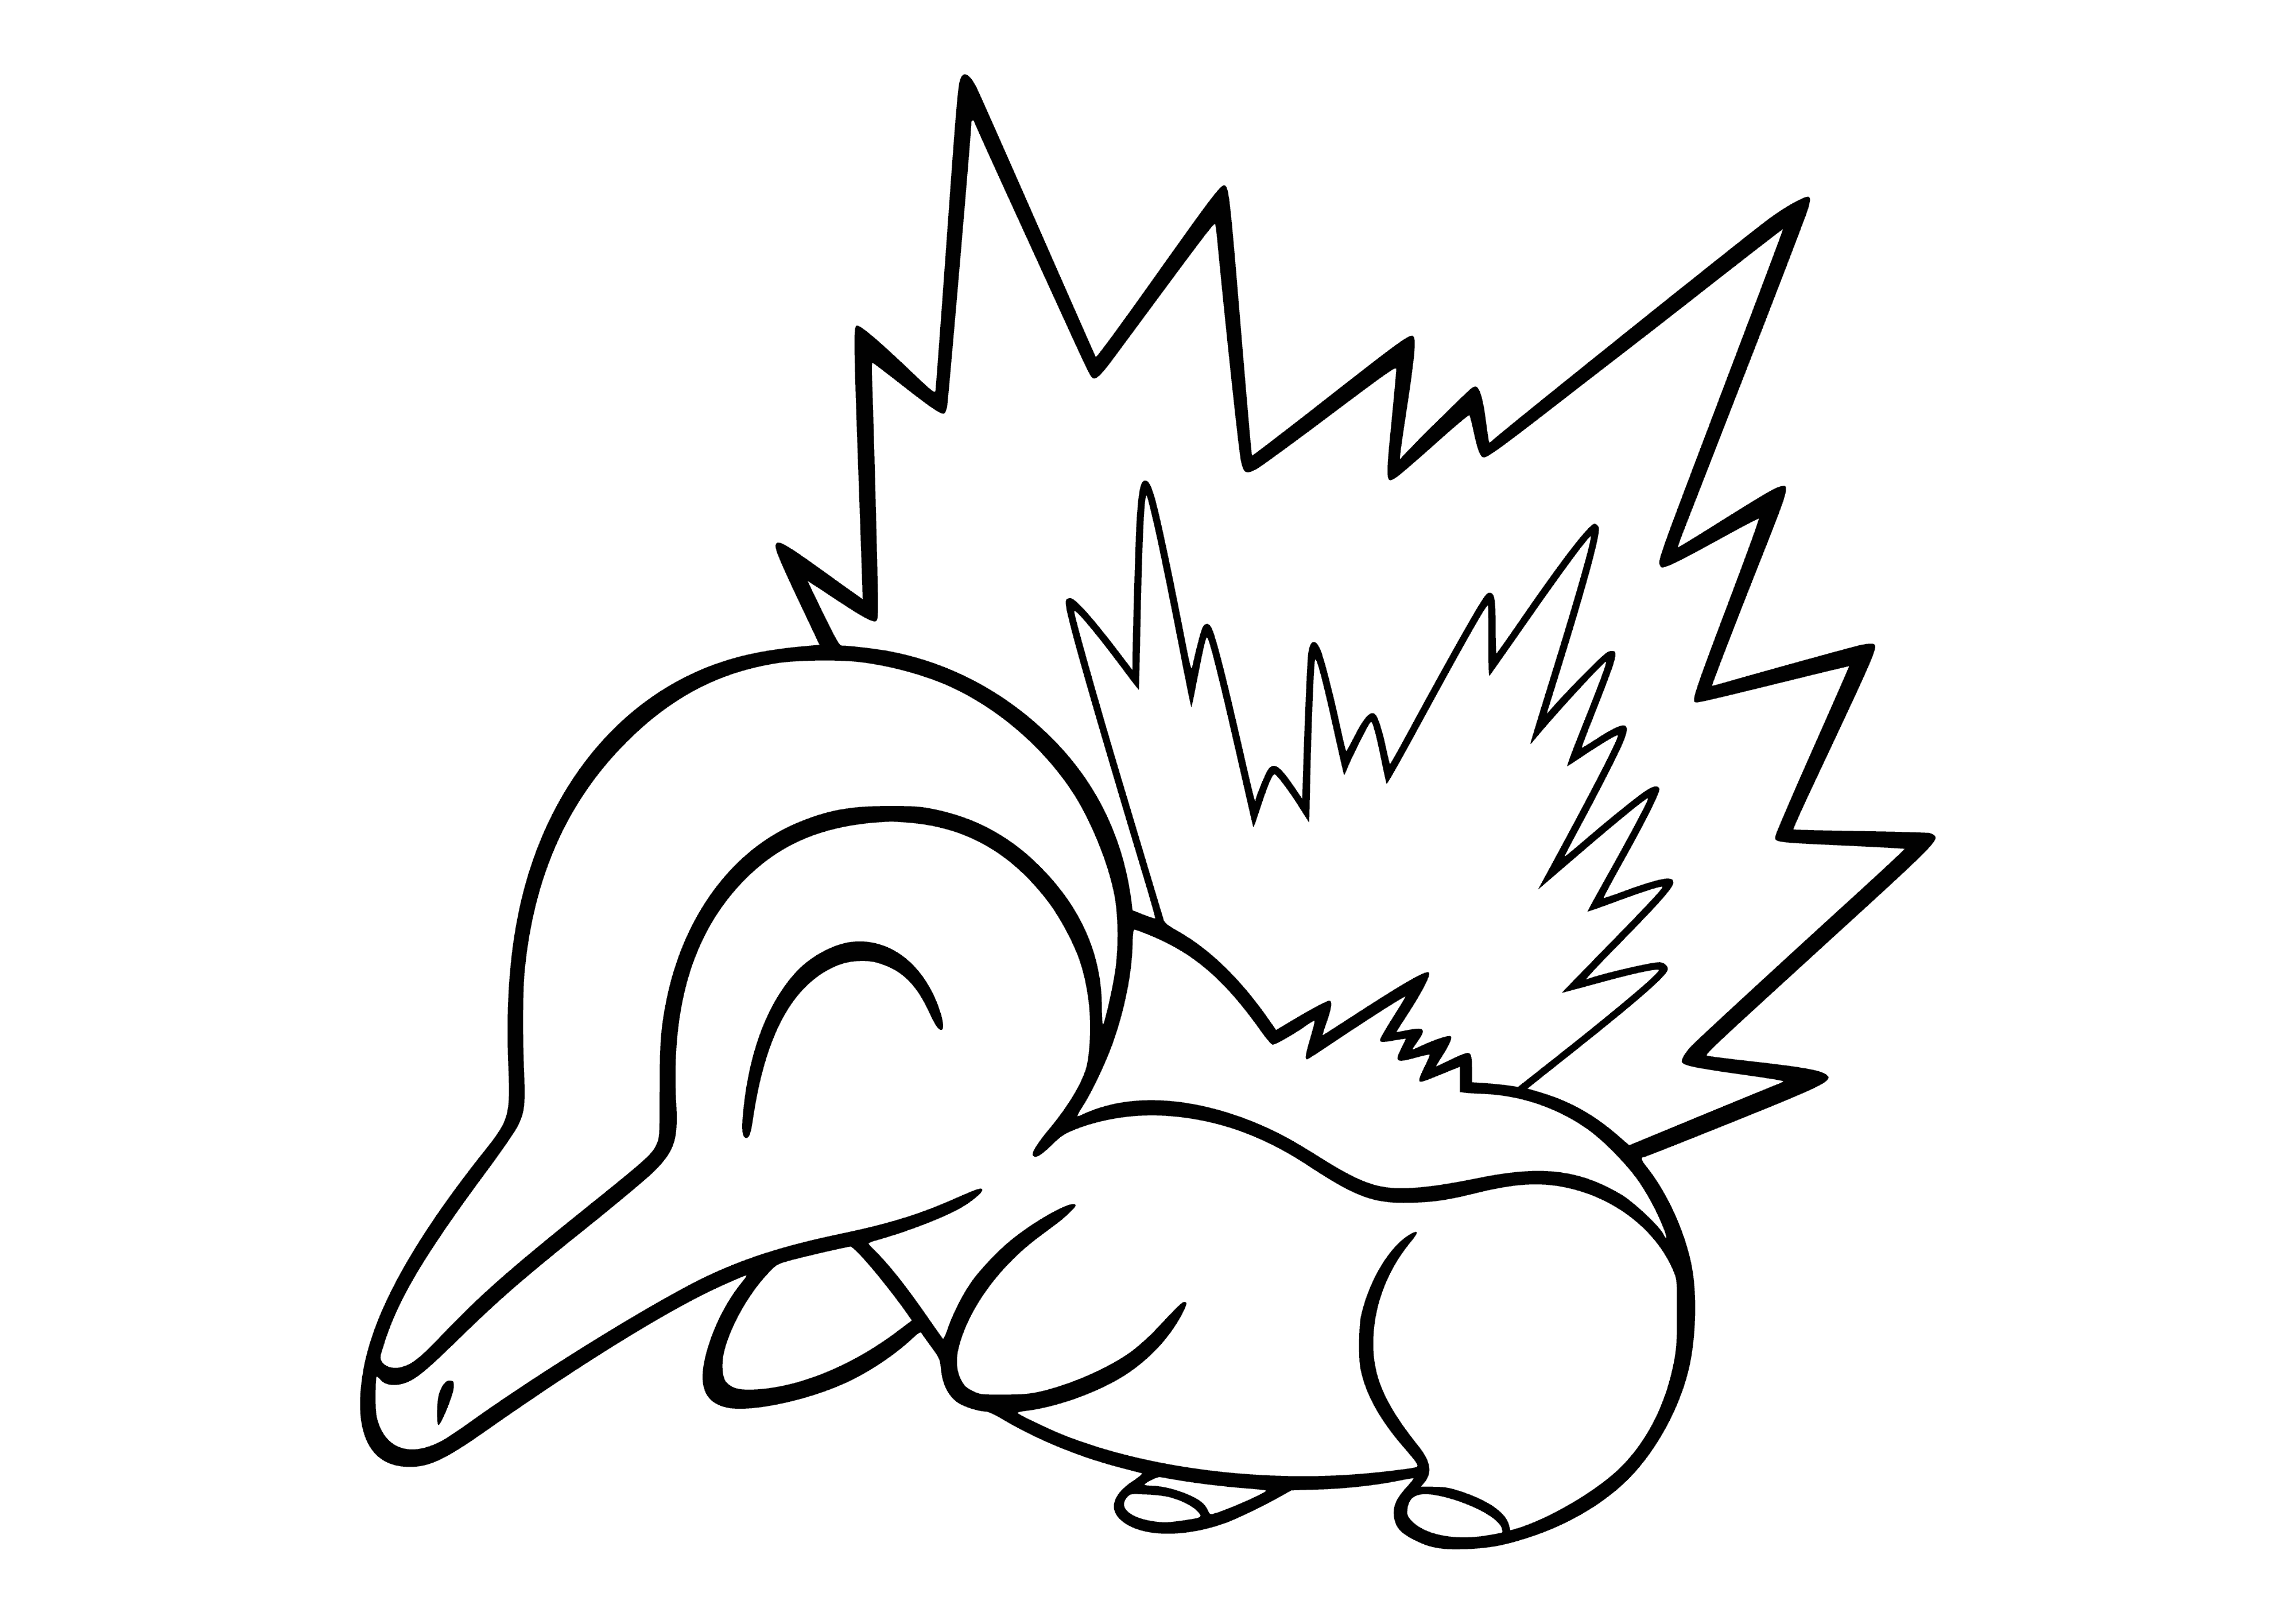 coloring page: Small, friendly Pokémon with yellow/orange fur, big tuft on head, black tail w/ orange tuft, & big black eyes.